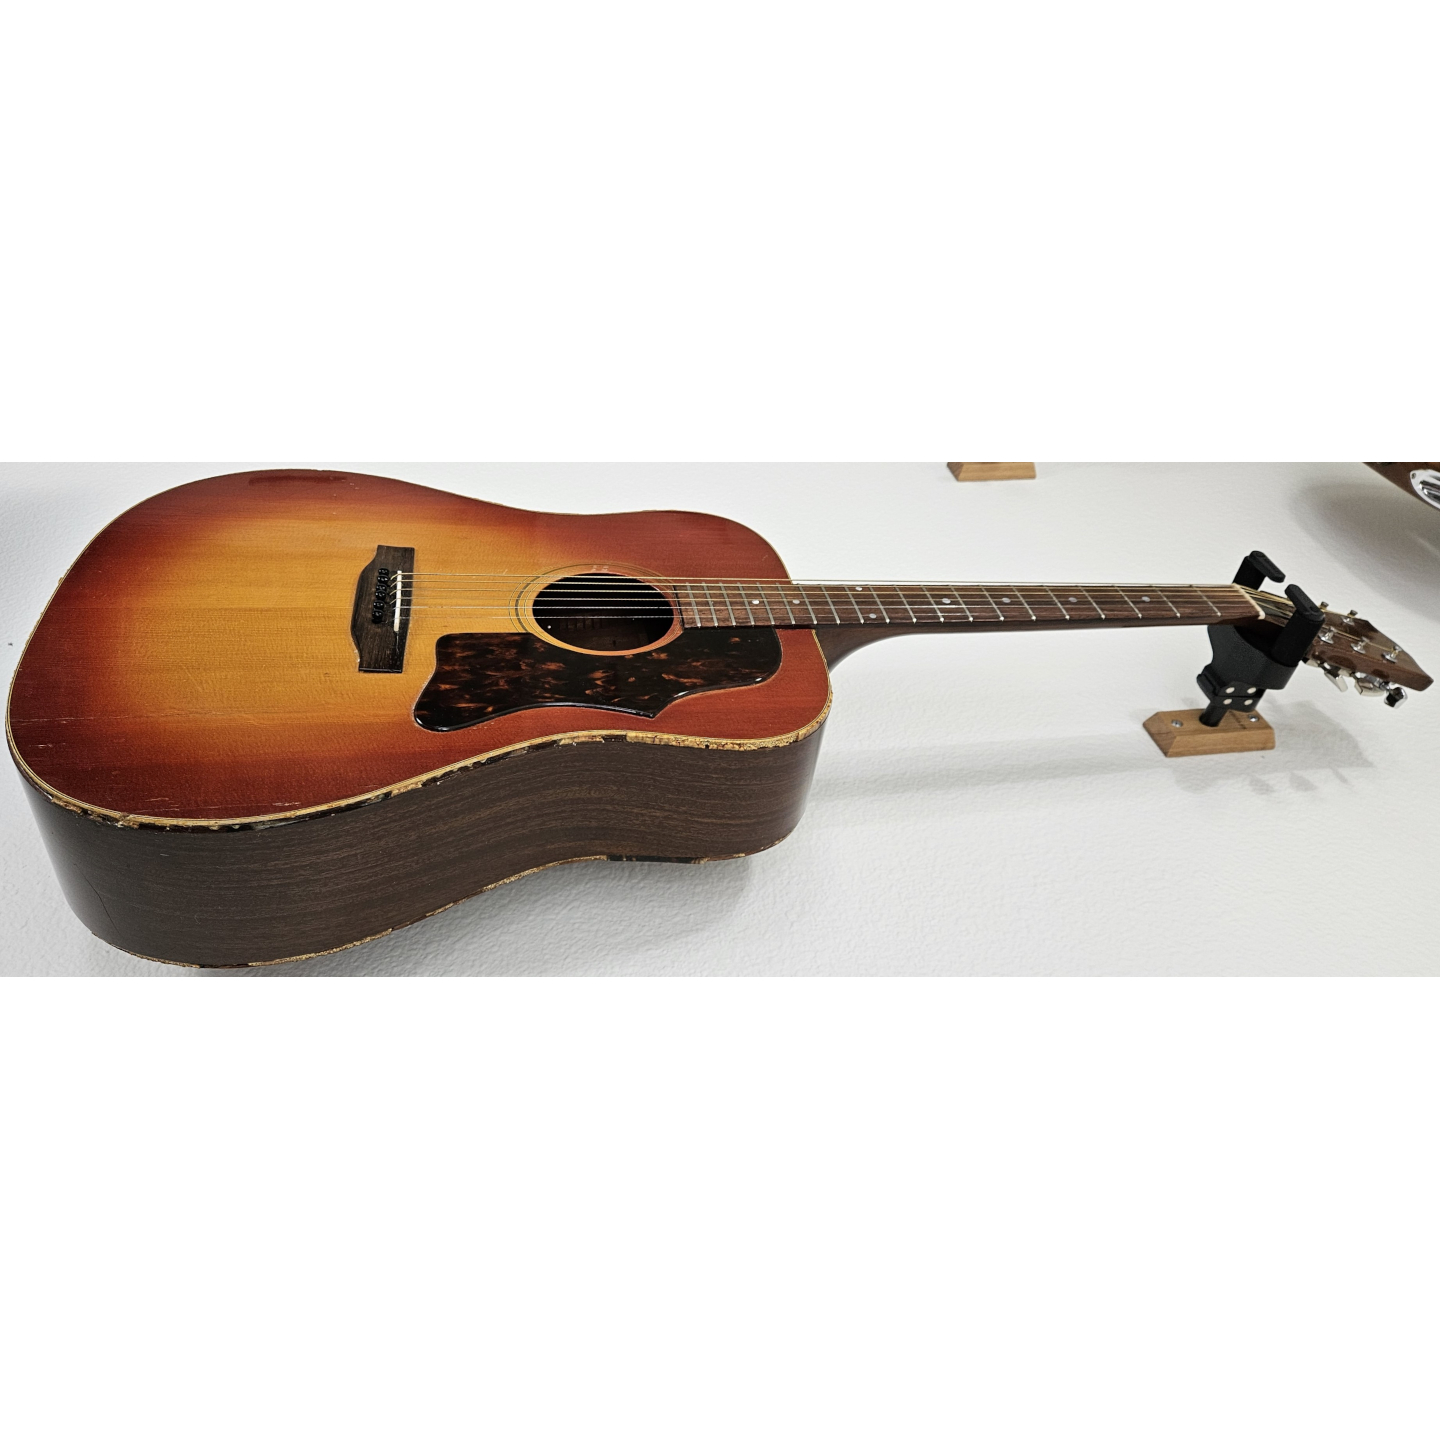 1970 Gibson J-45 Deluxe Cherry Sunburst Dreadnought Acoustic-Electric Guitar